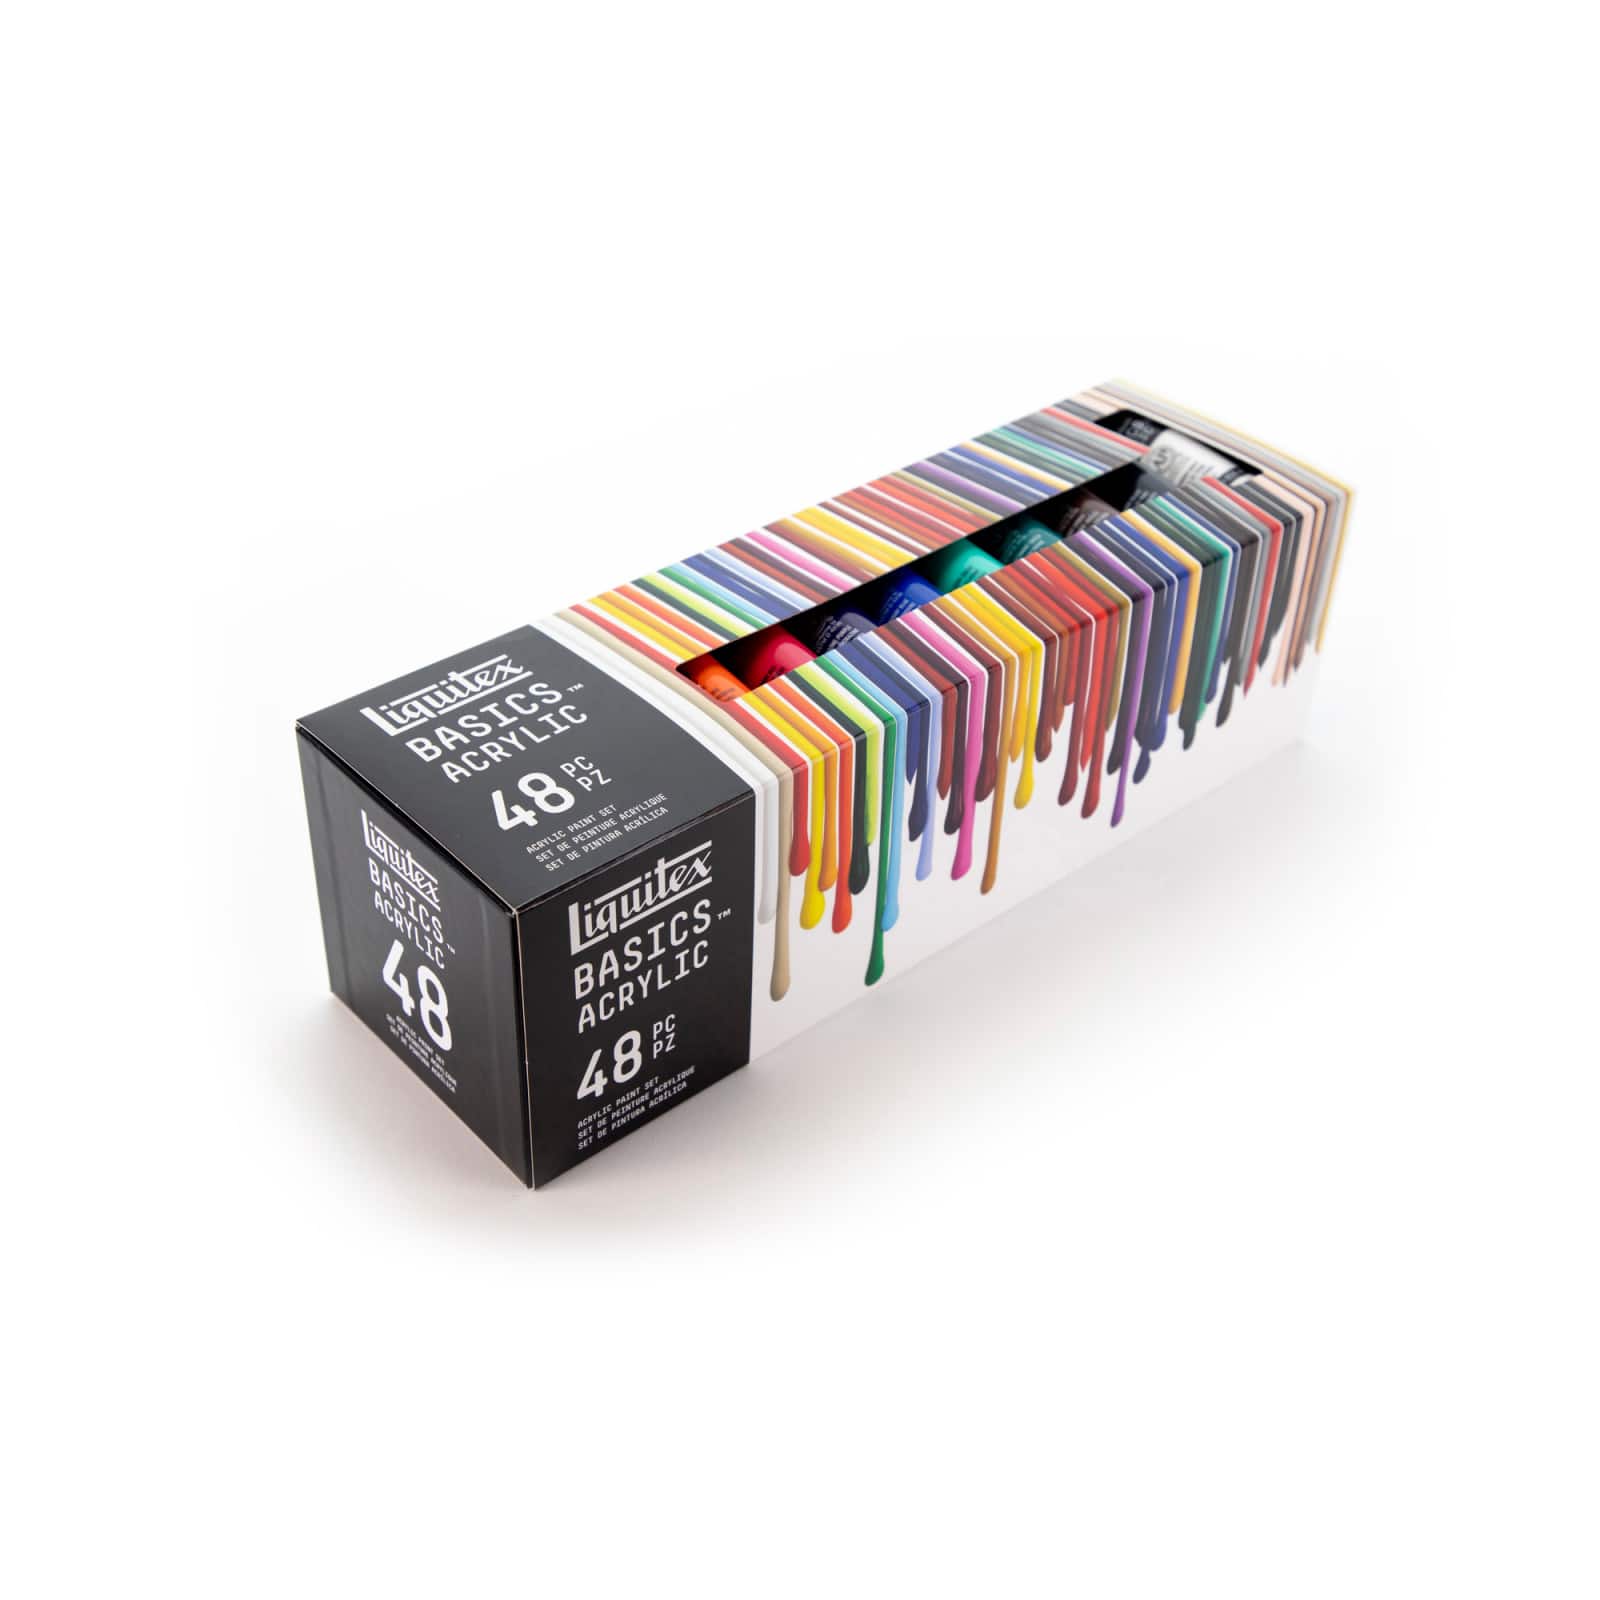 6 Packs: 48 ct. (288 total) Liquitex BASICS® Acrylic Color Set, 22 mL